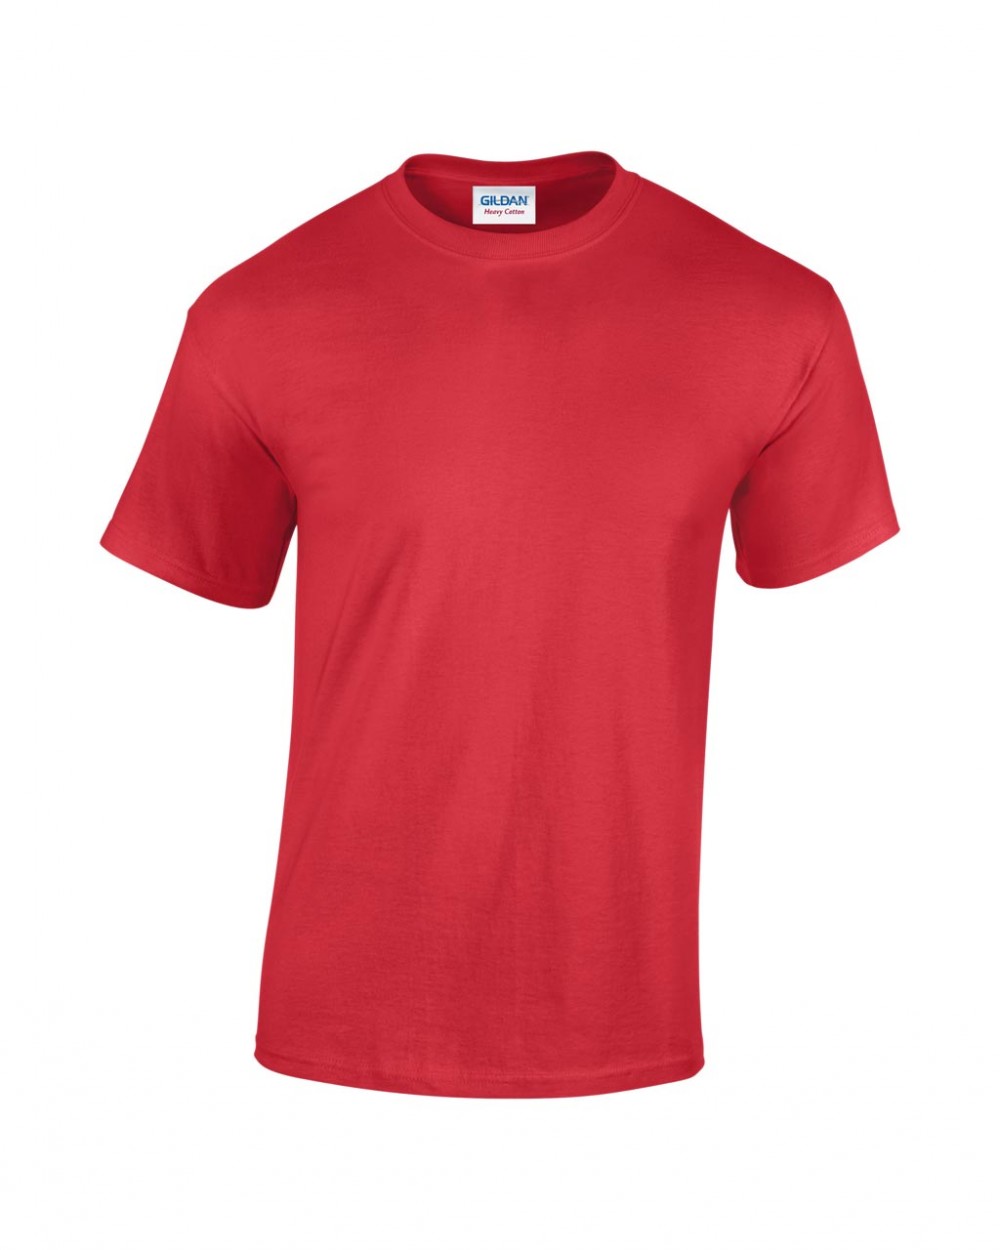 Gildan klasszikus környakas pamut póló, uniszex - piros